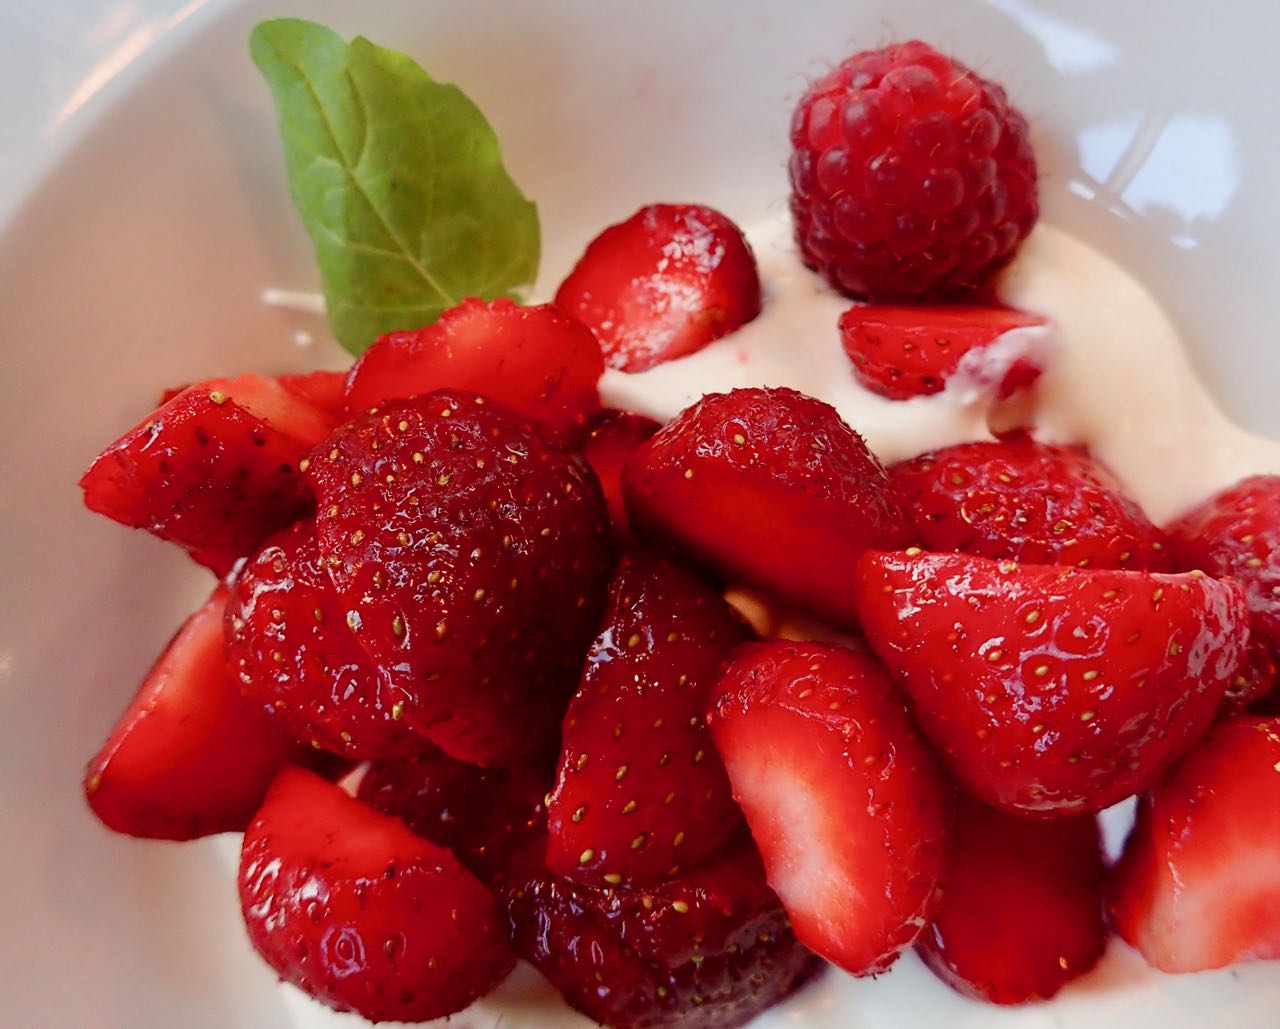 Valldal Fjordhotell strawberries review